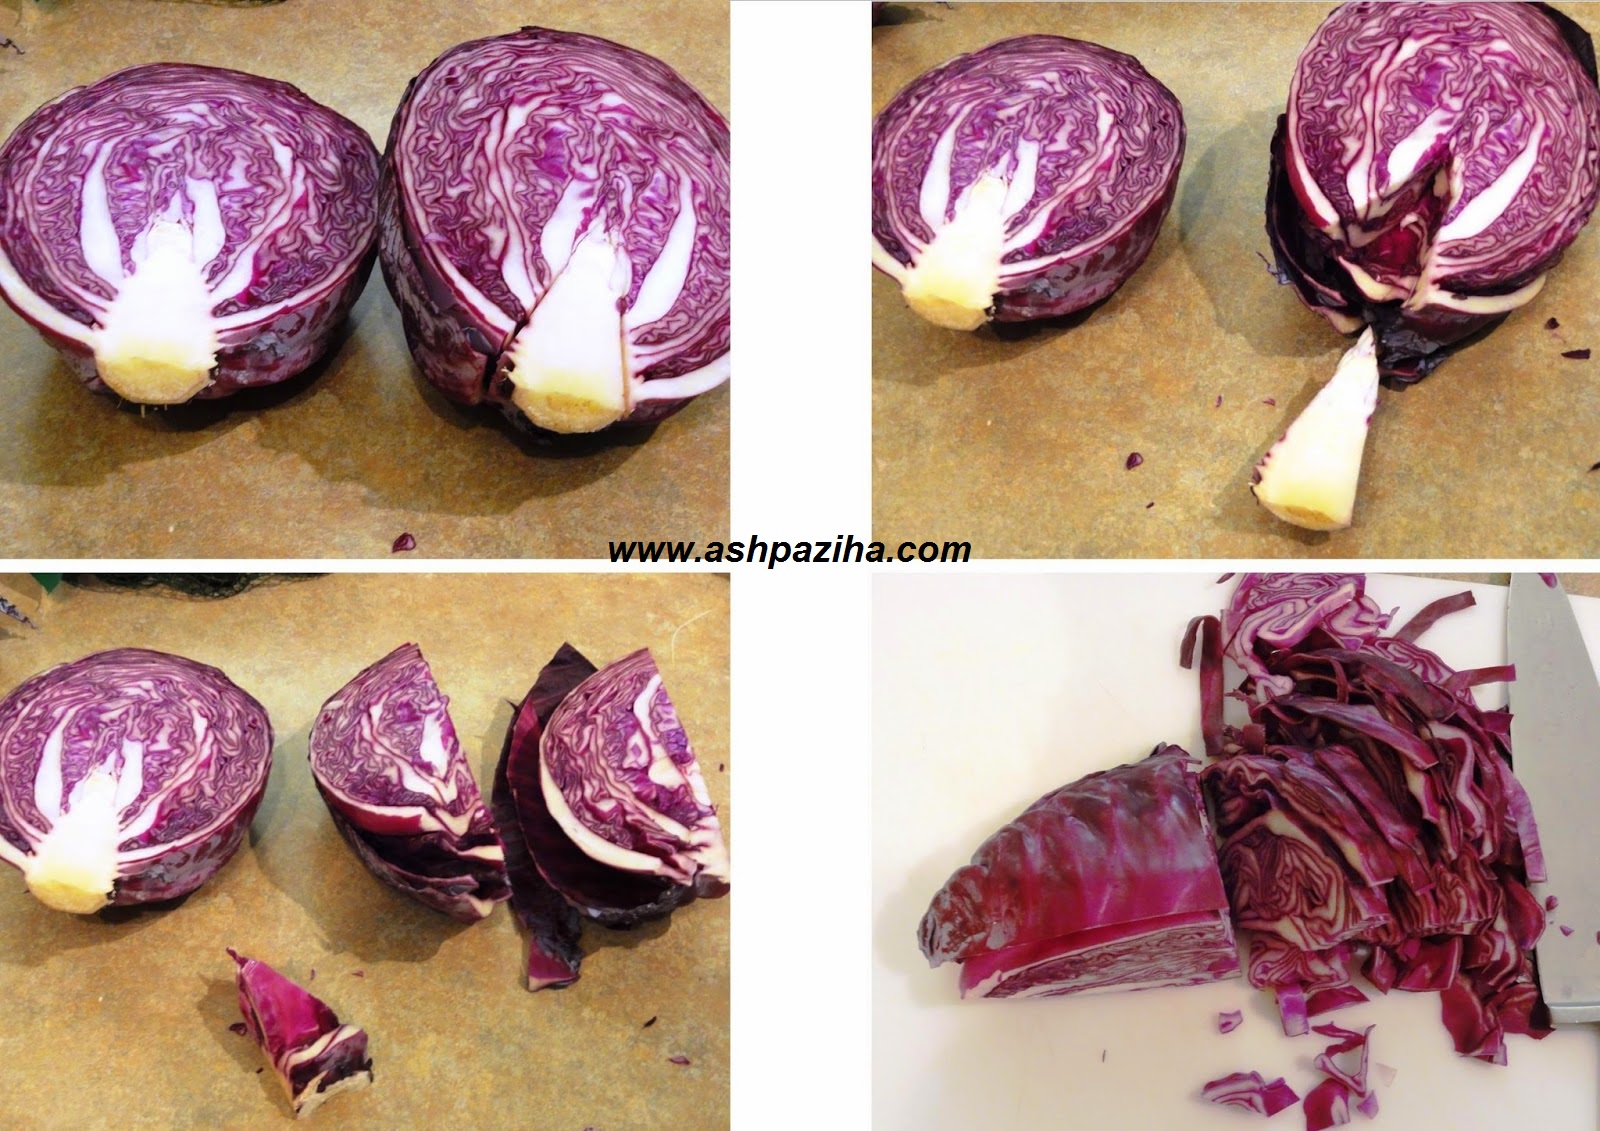 Mode - preparing - Pickle - Cabbage - (2)